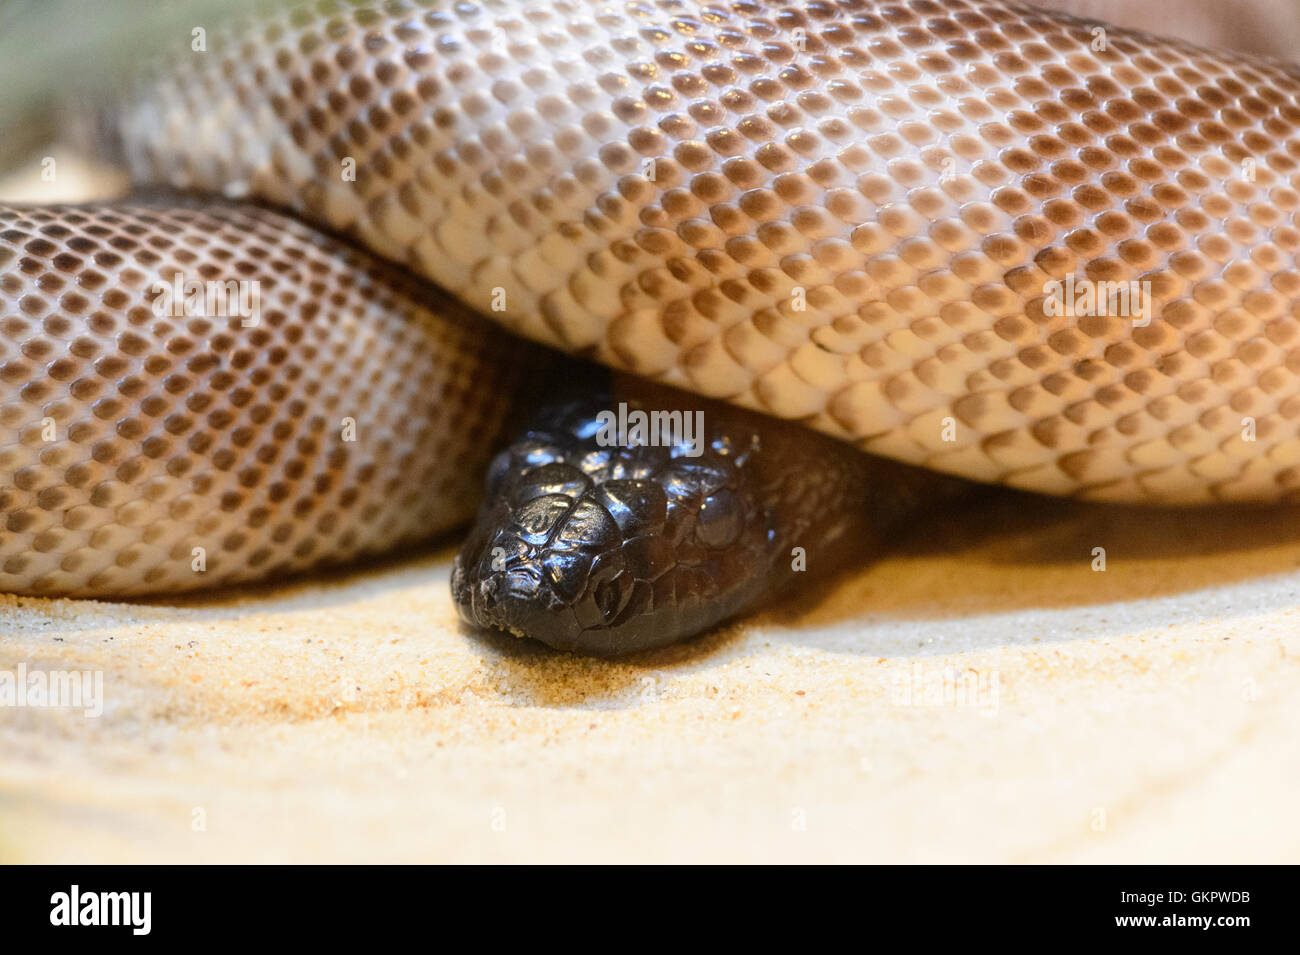 Black-headed Python (Aspidites melanocephalus), Australia They grow to 3 metres and are non-venomous and harmless to humans Stock Photo